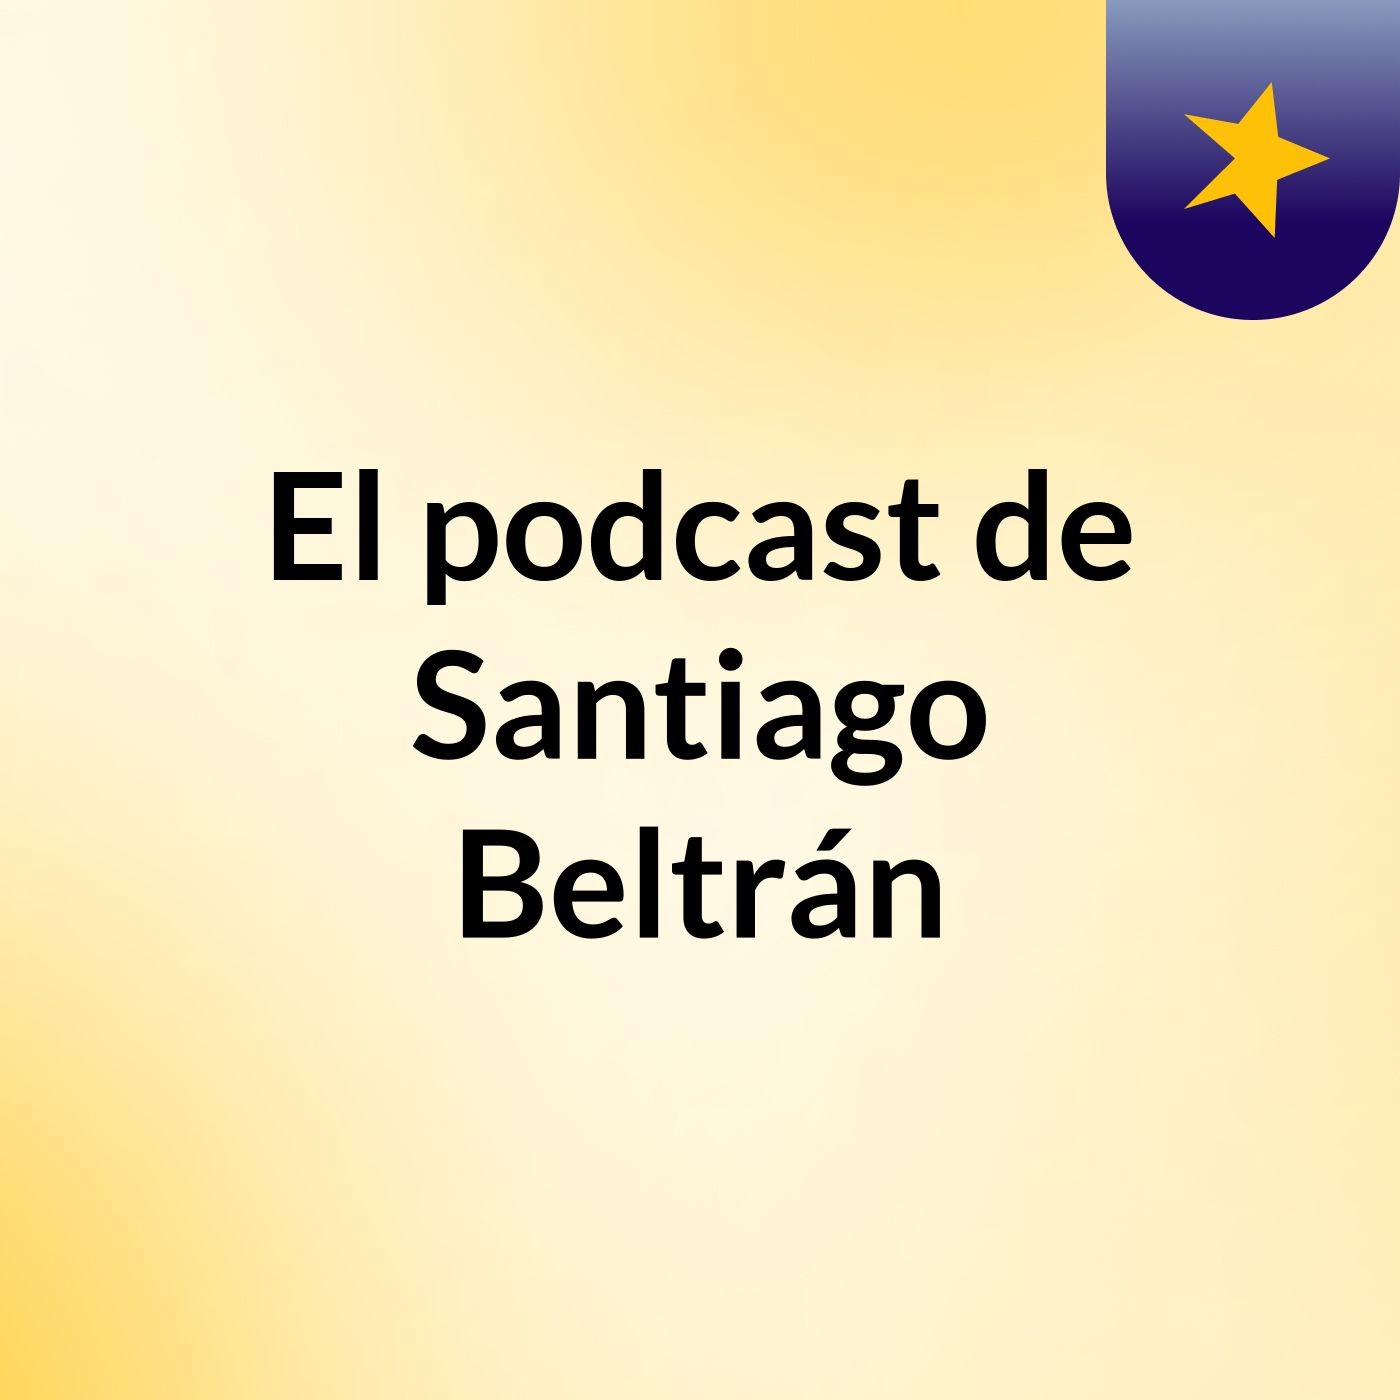 El podcast de Santiago Beltrán